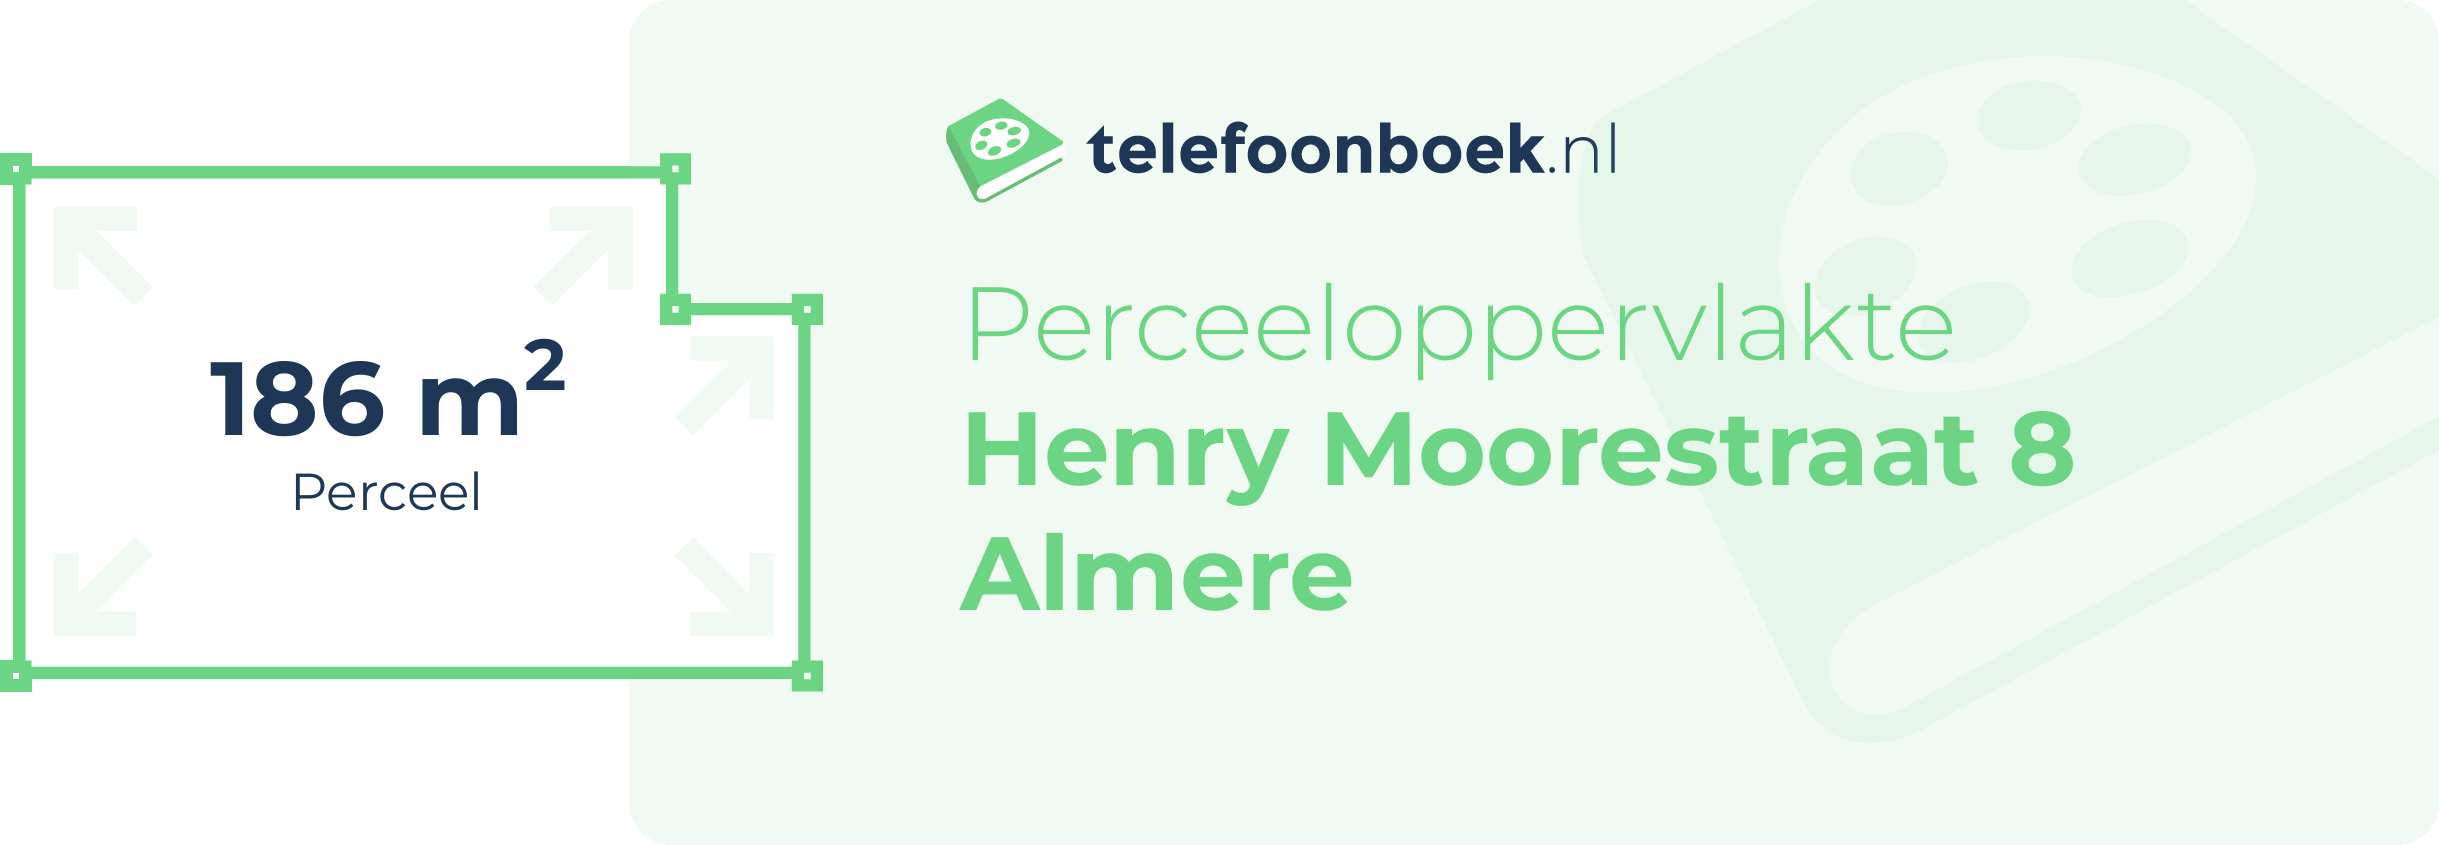 Perceeloppervlakte Henry Moorestraat 8 Almere